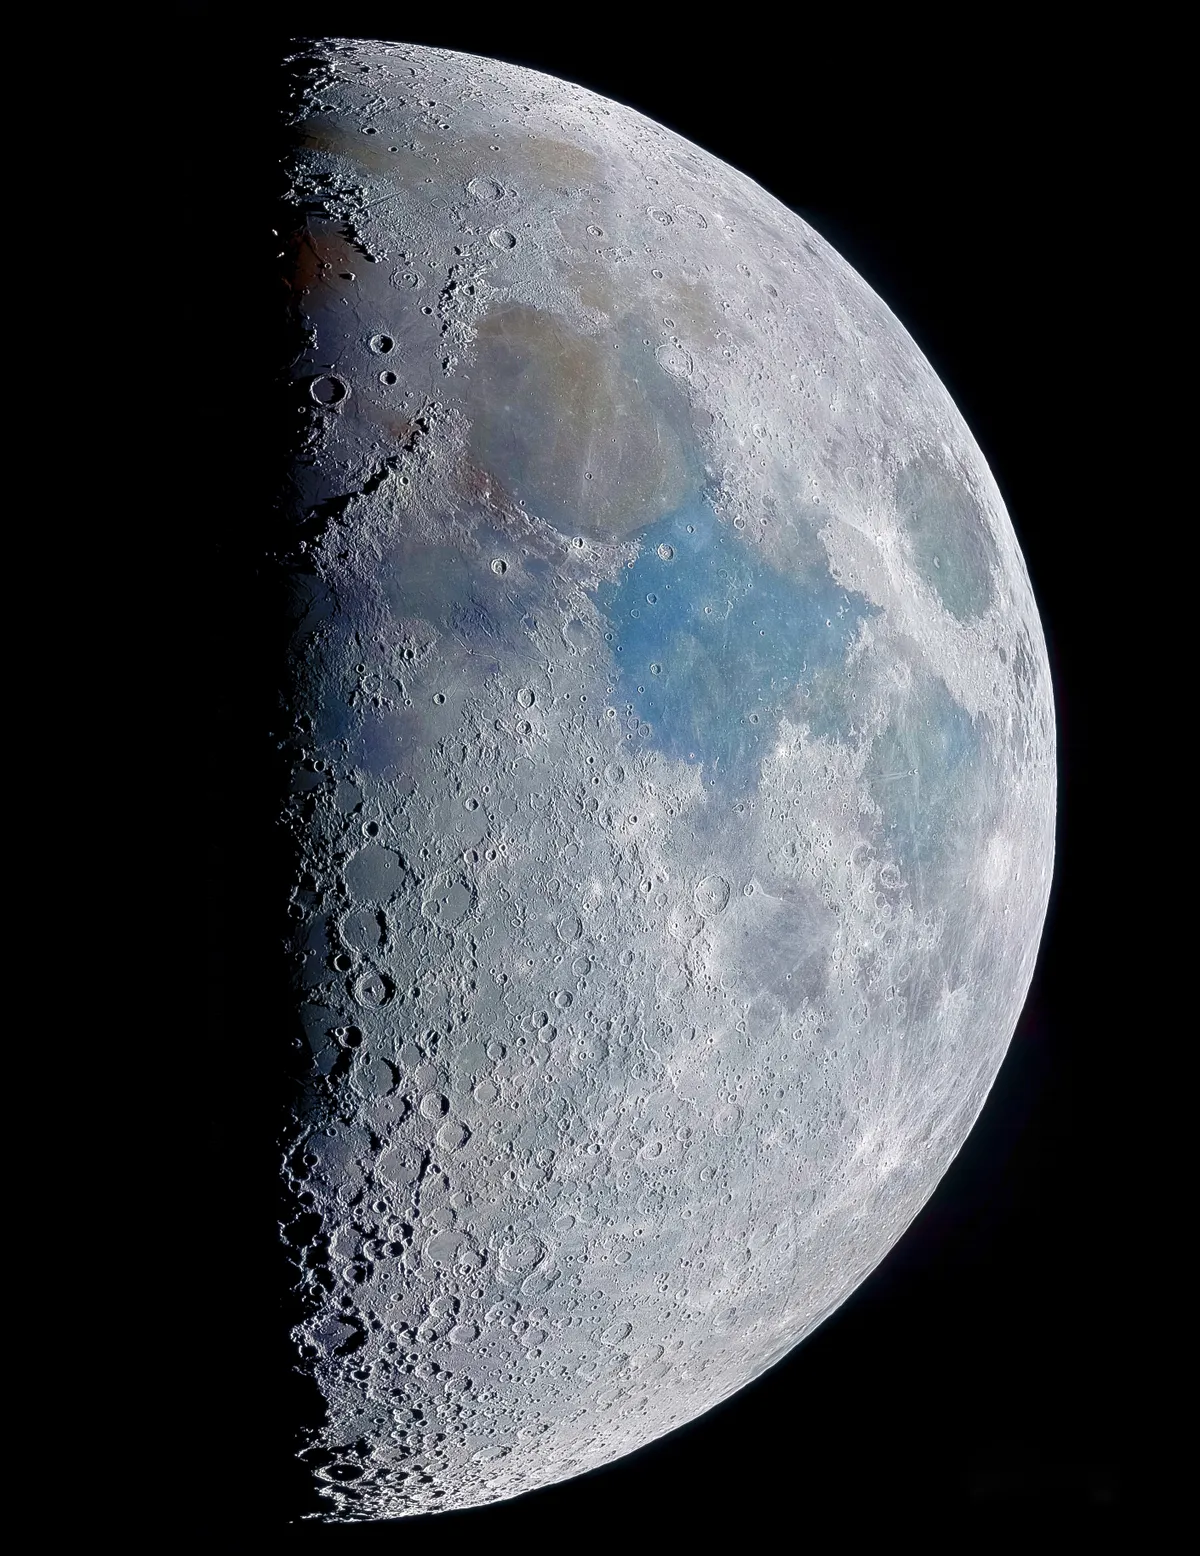 Moon Rich Addis, Wallasey, Merseyside, 21 March 2021. Equipment: ZWO ASI 120MC colour camera, Celestron NexStar 6SE Schmidt-Cassegrain